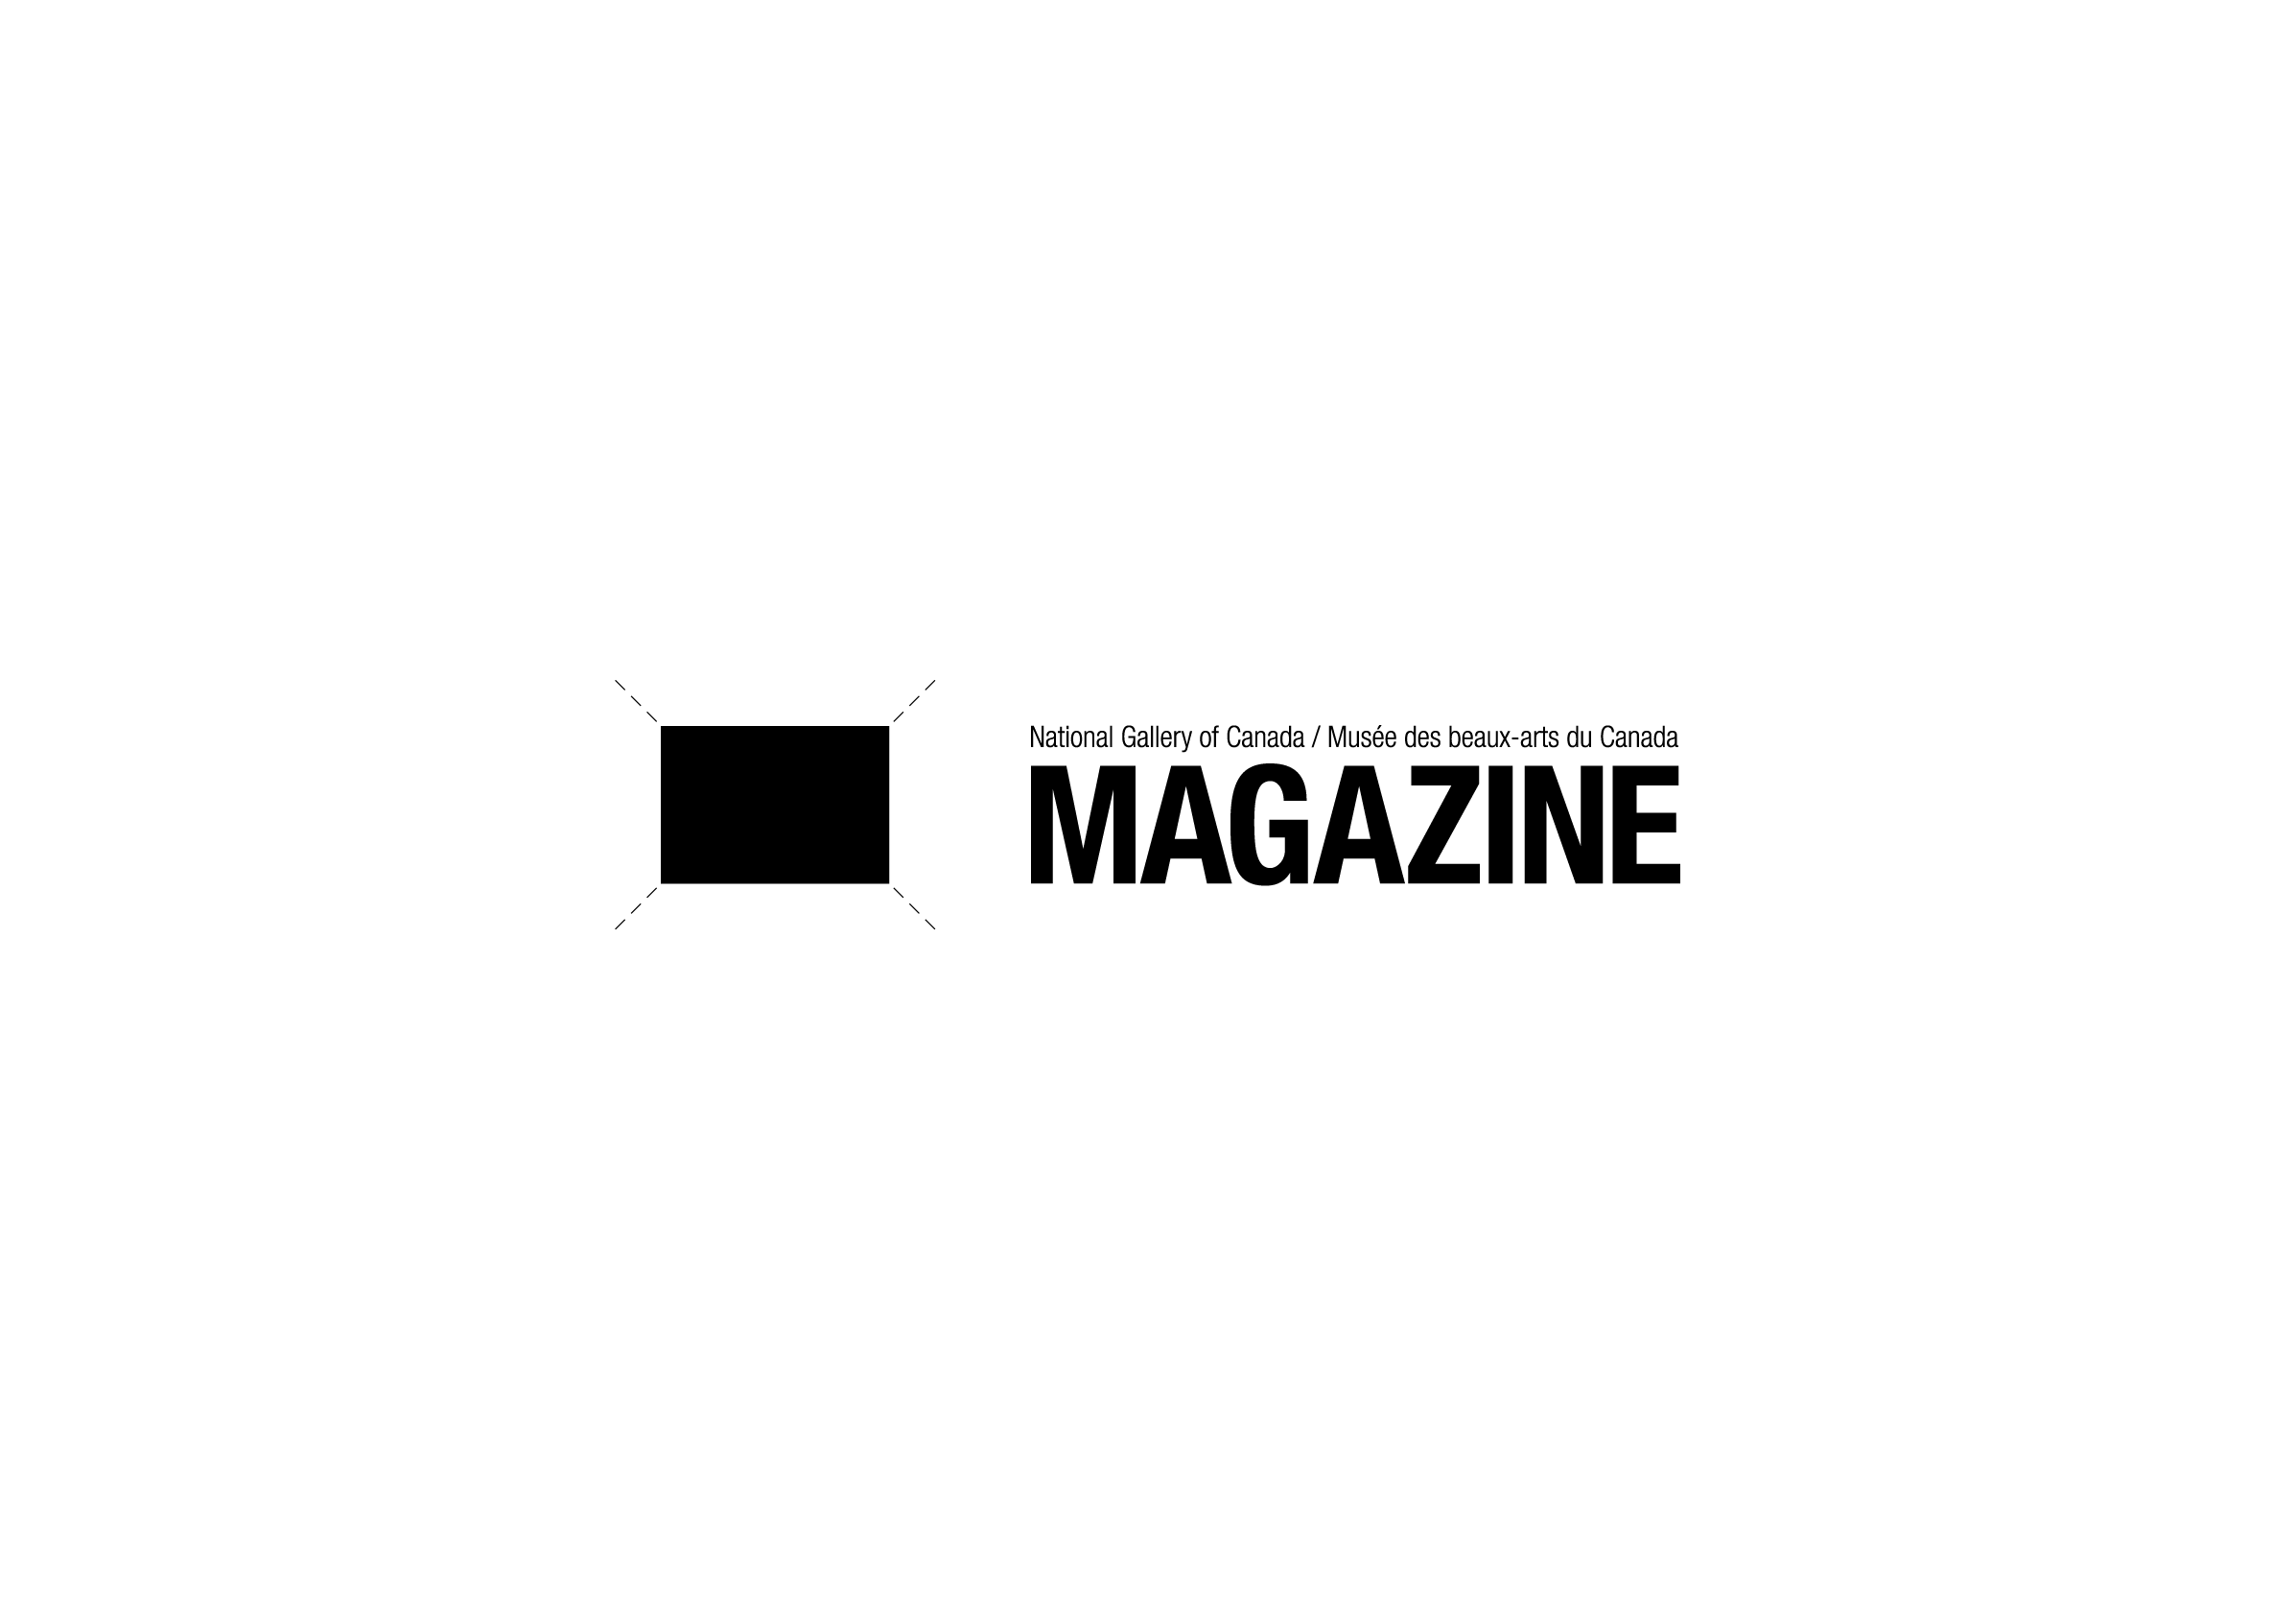 Magizine Logo - National Gallery of Canada: Branding for online magazine